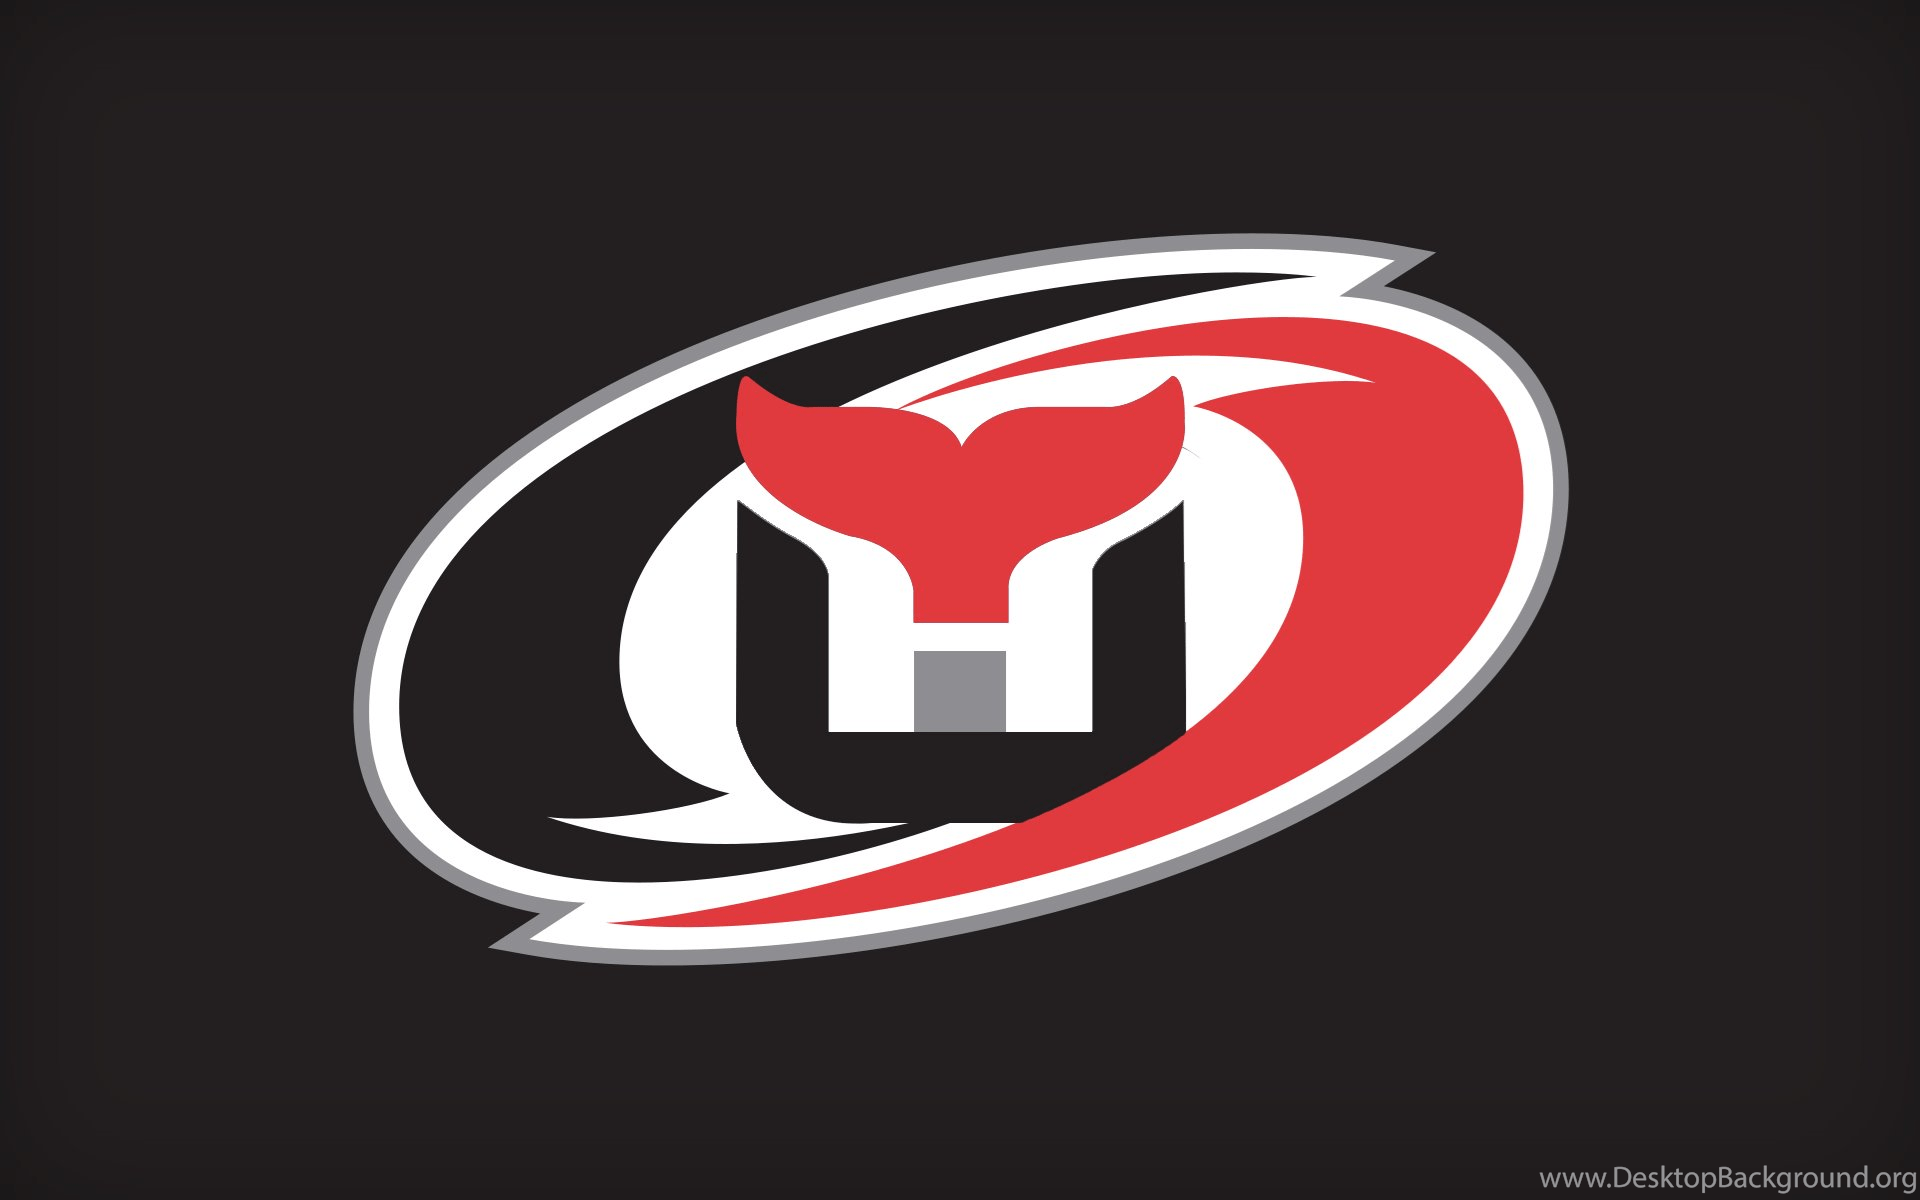 10 Original NHL Teams Logo - BarDown: Some Of These NHL Team Logo Mashups Are Better Than The ...